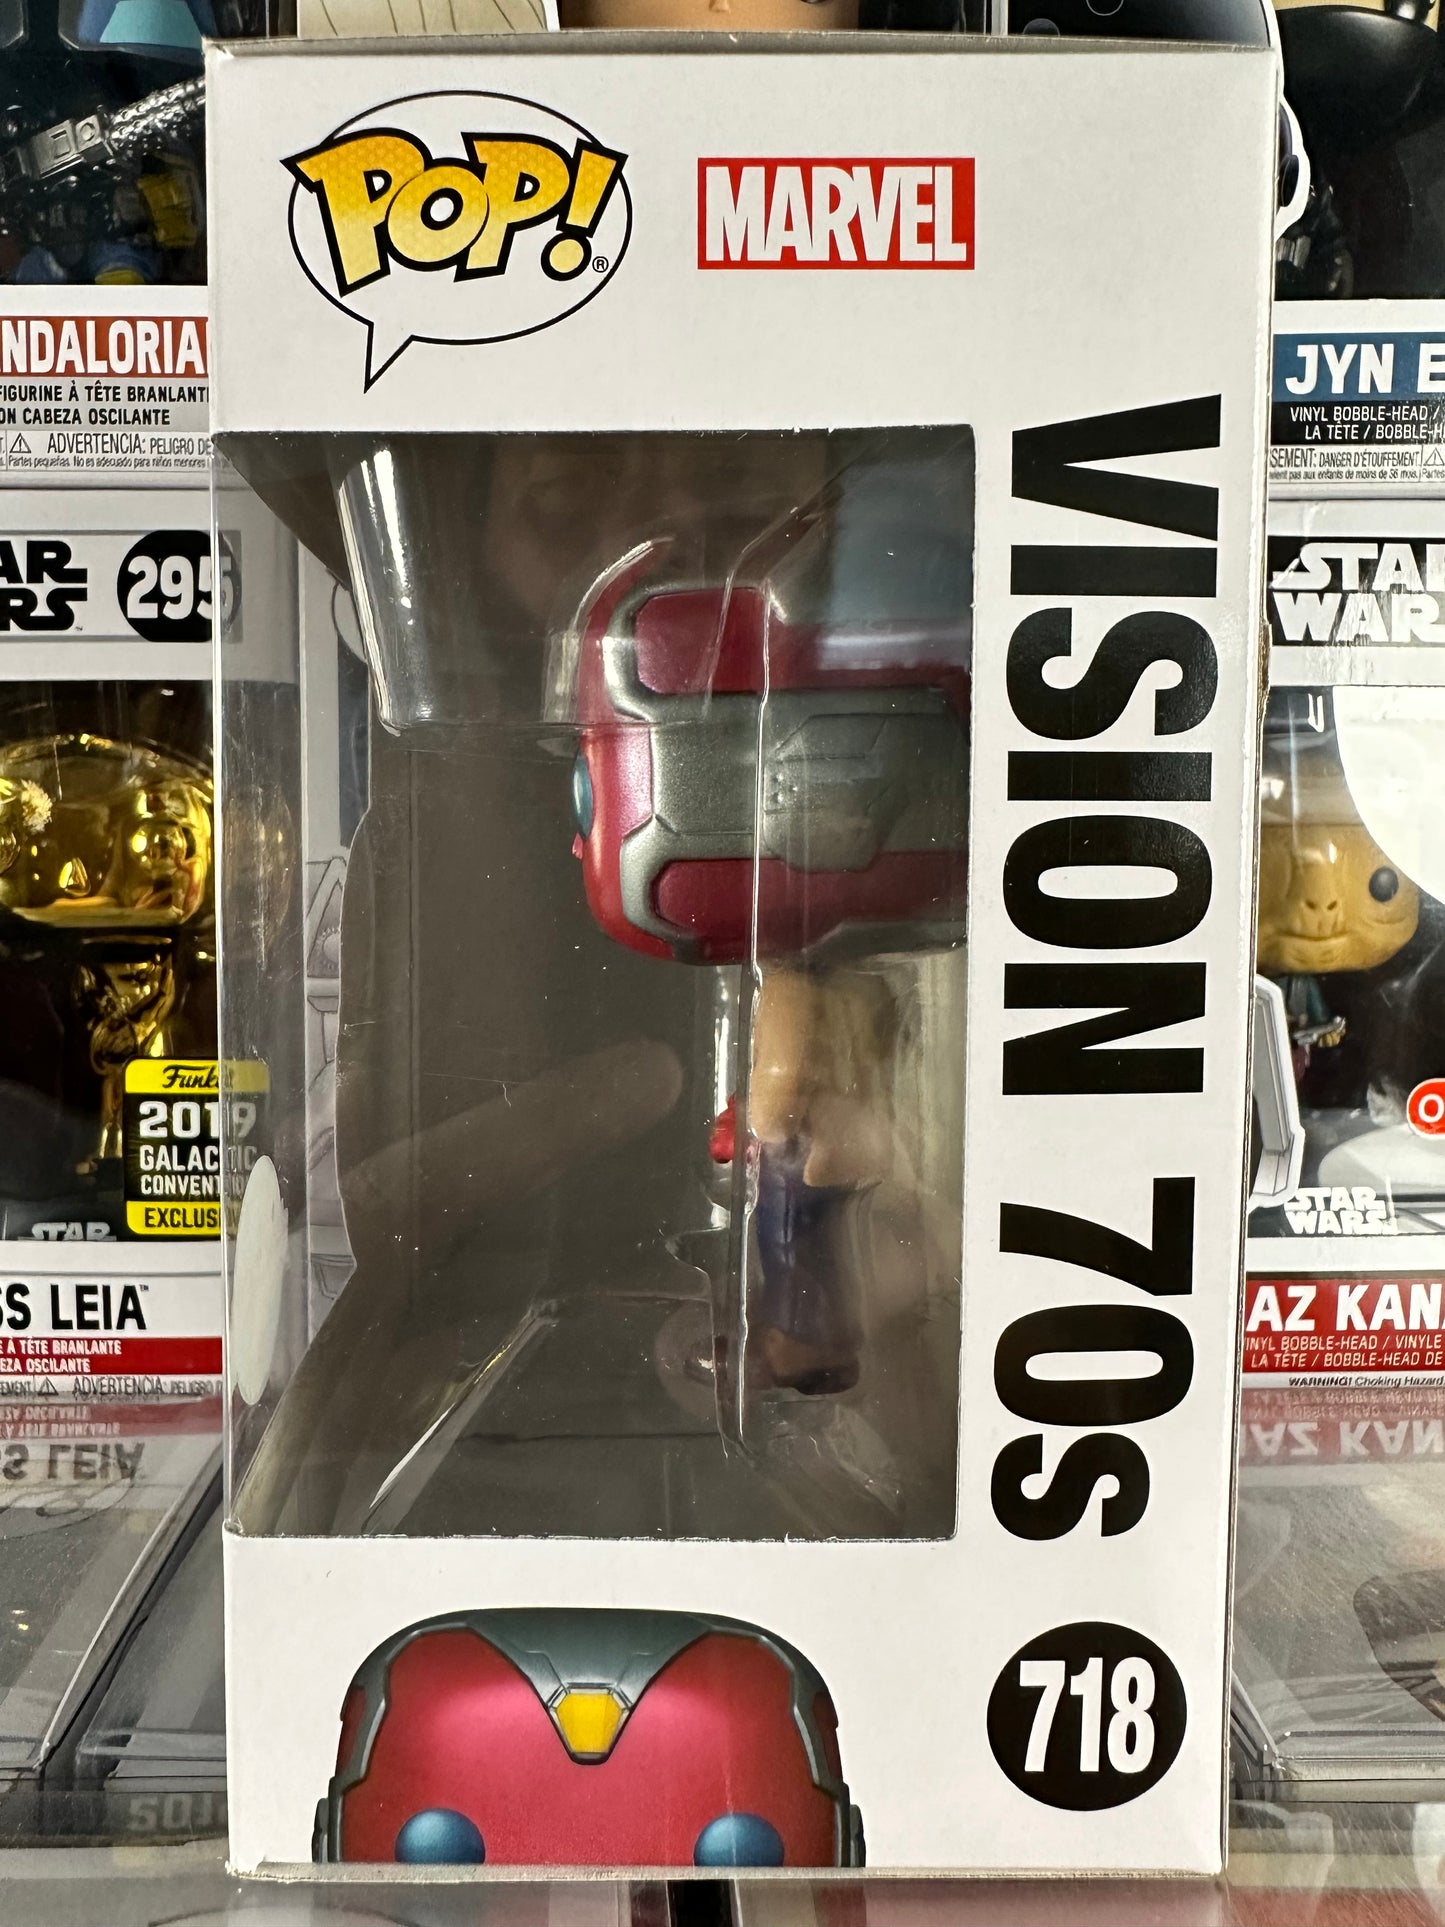 Marvel WandaVision - 70s Vision (718)